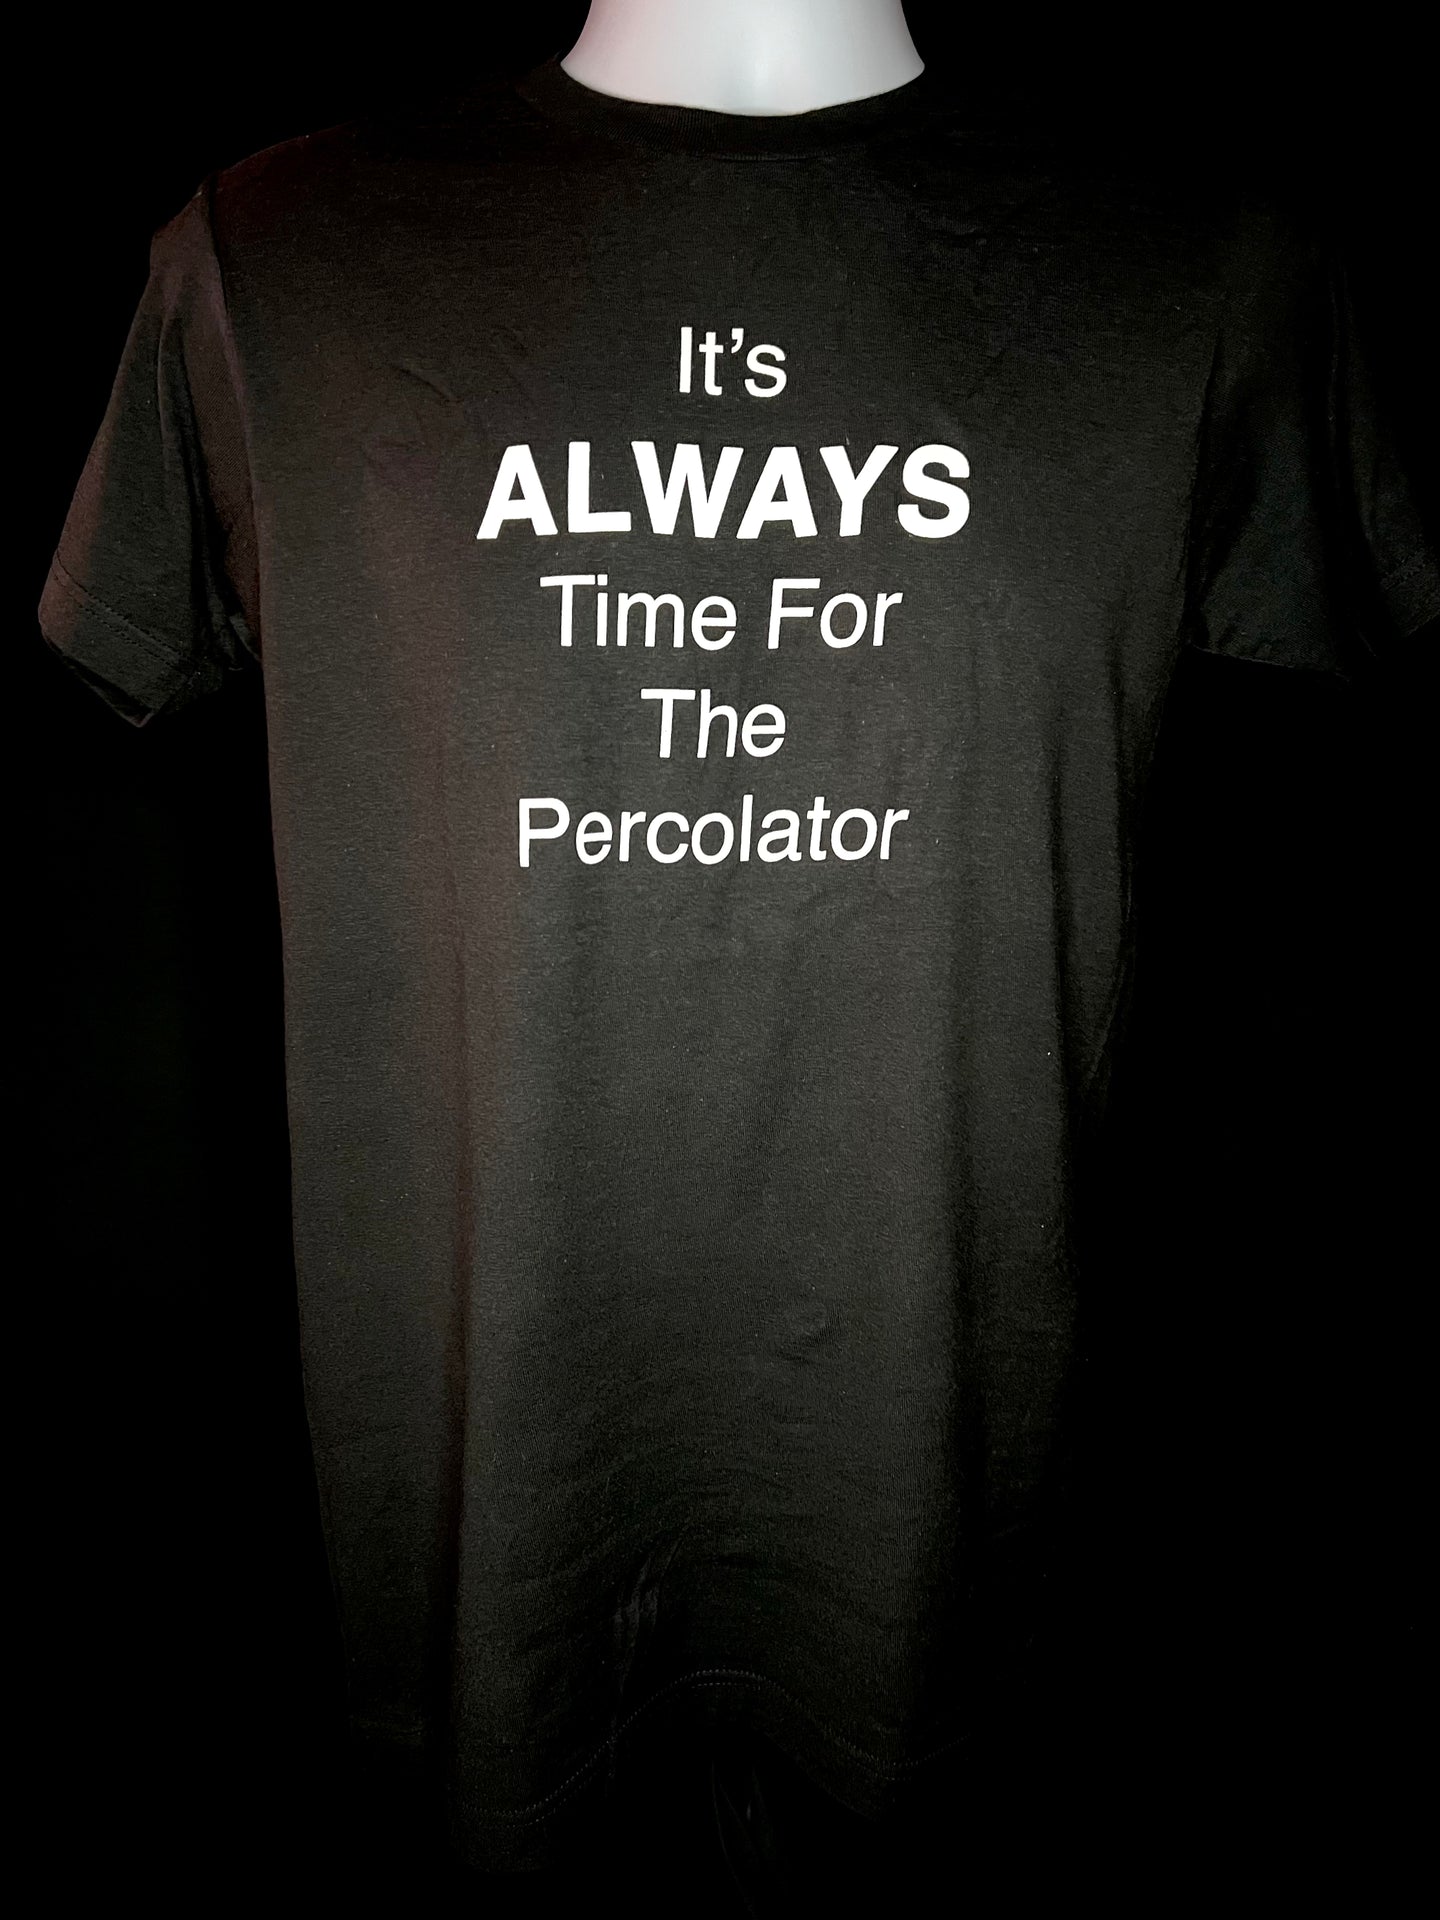 It's ALWAYS Time For The Percolator™ - Black T-Shirt (Men's/Women's)